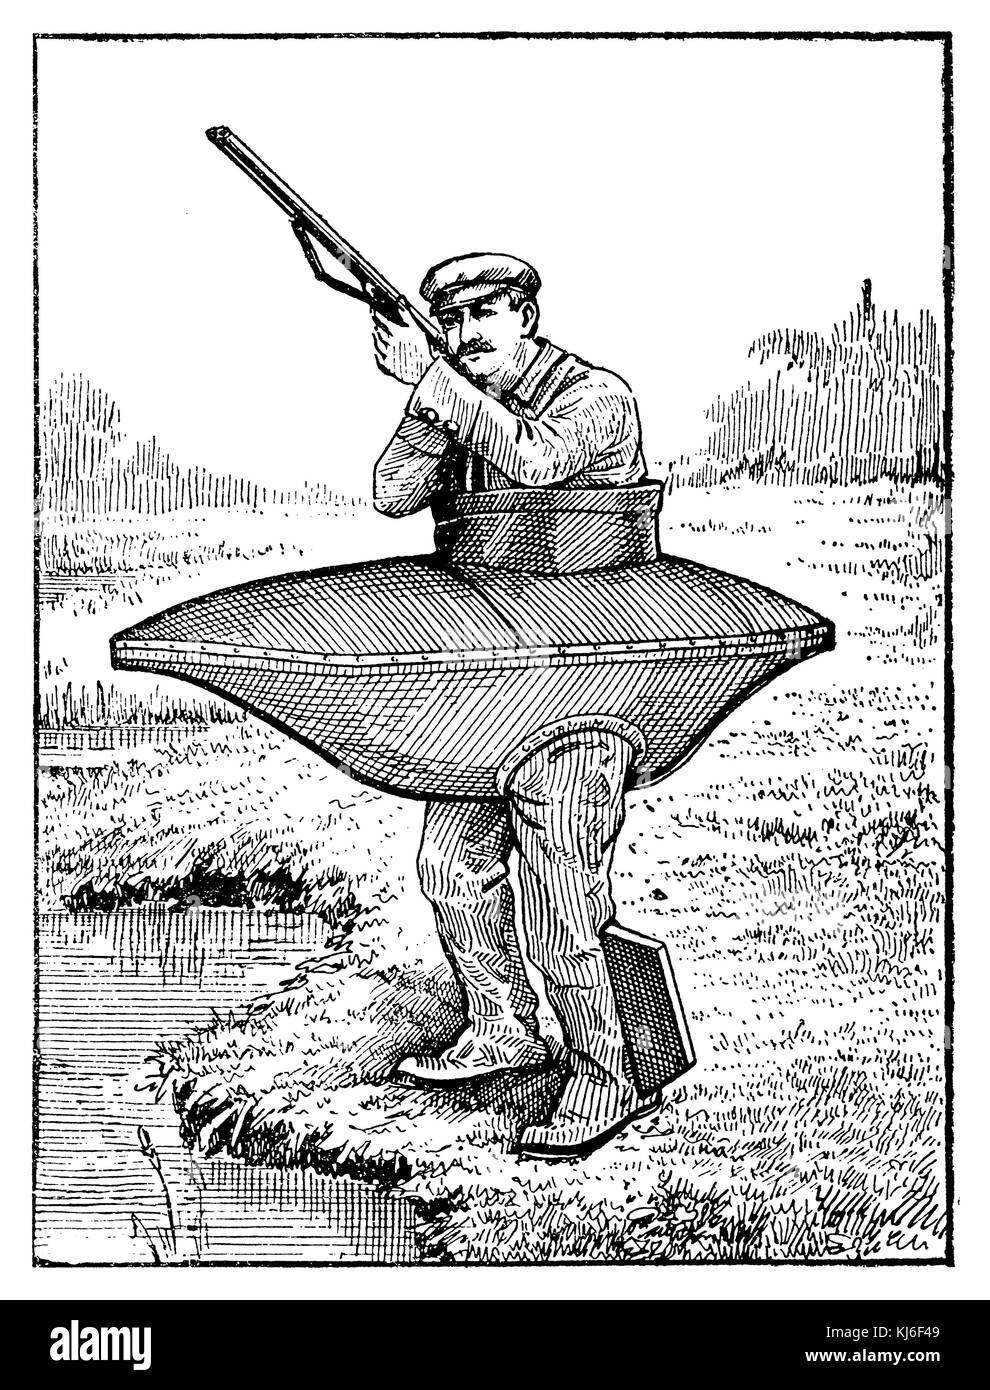 Hunter rubber boot for hunting in the river and marsh (Jäger mit Gummiboot für die Jagd in Fluss und Sumpf) Stock Photo